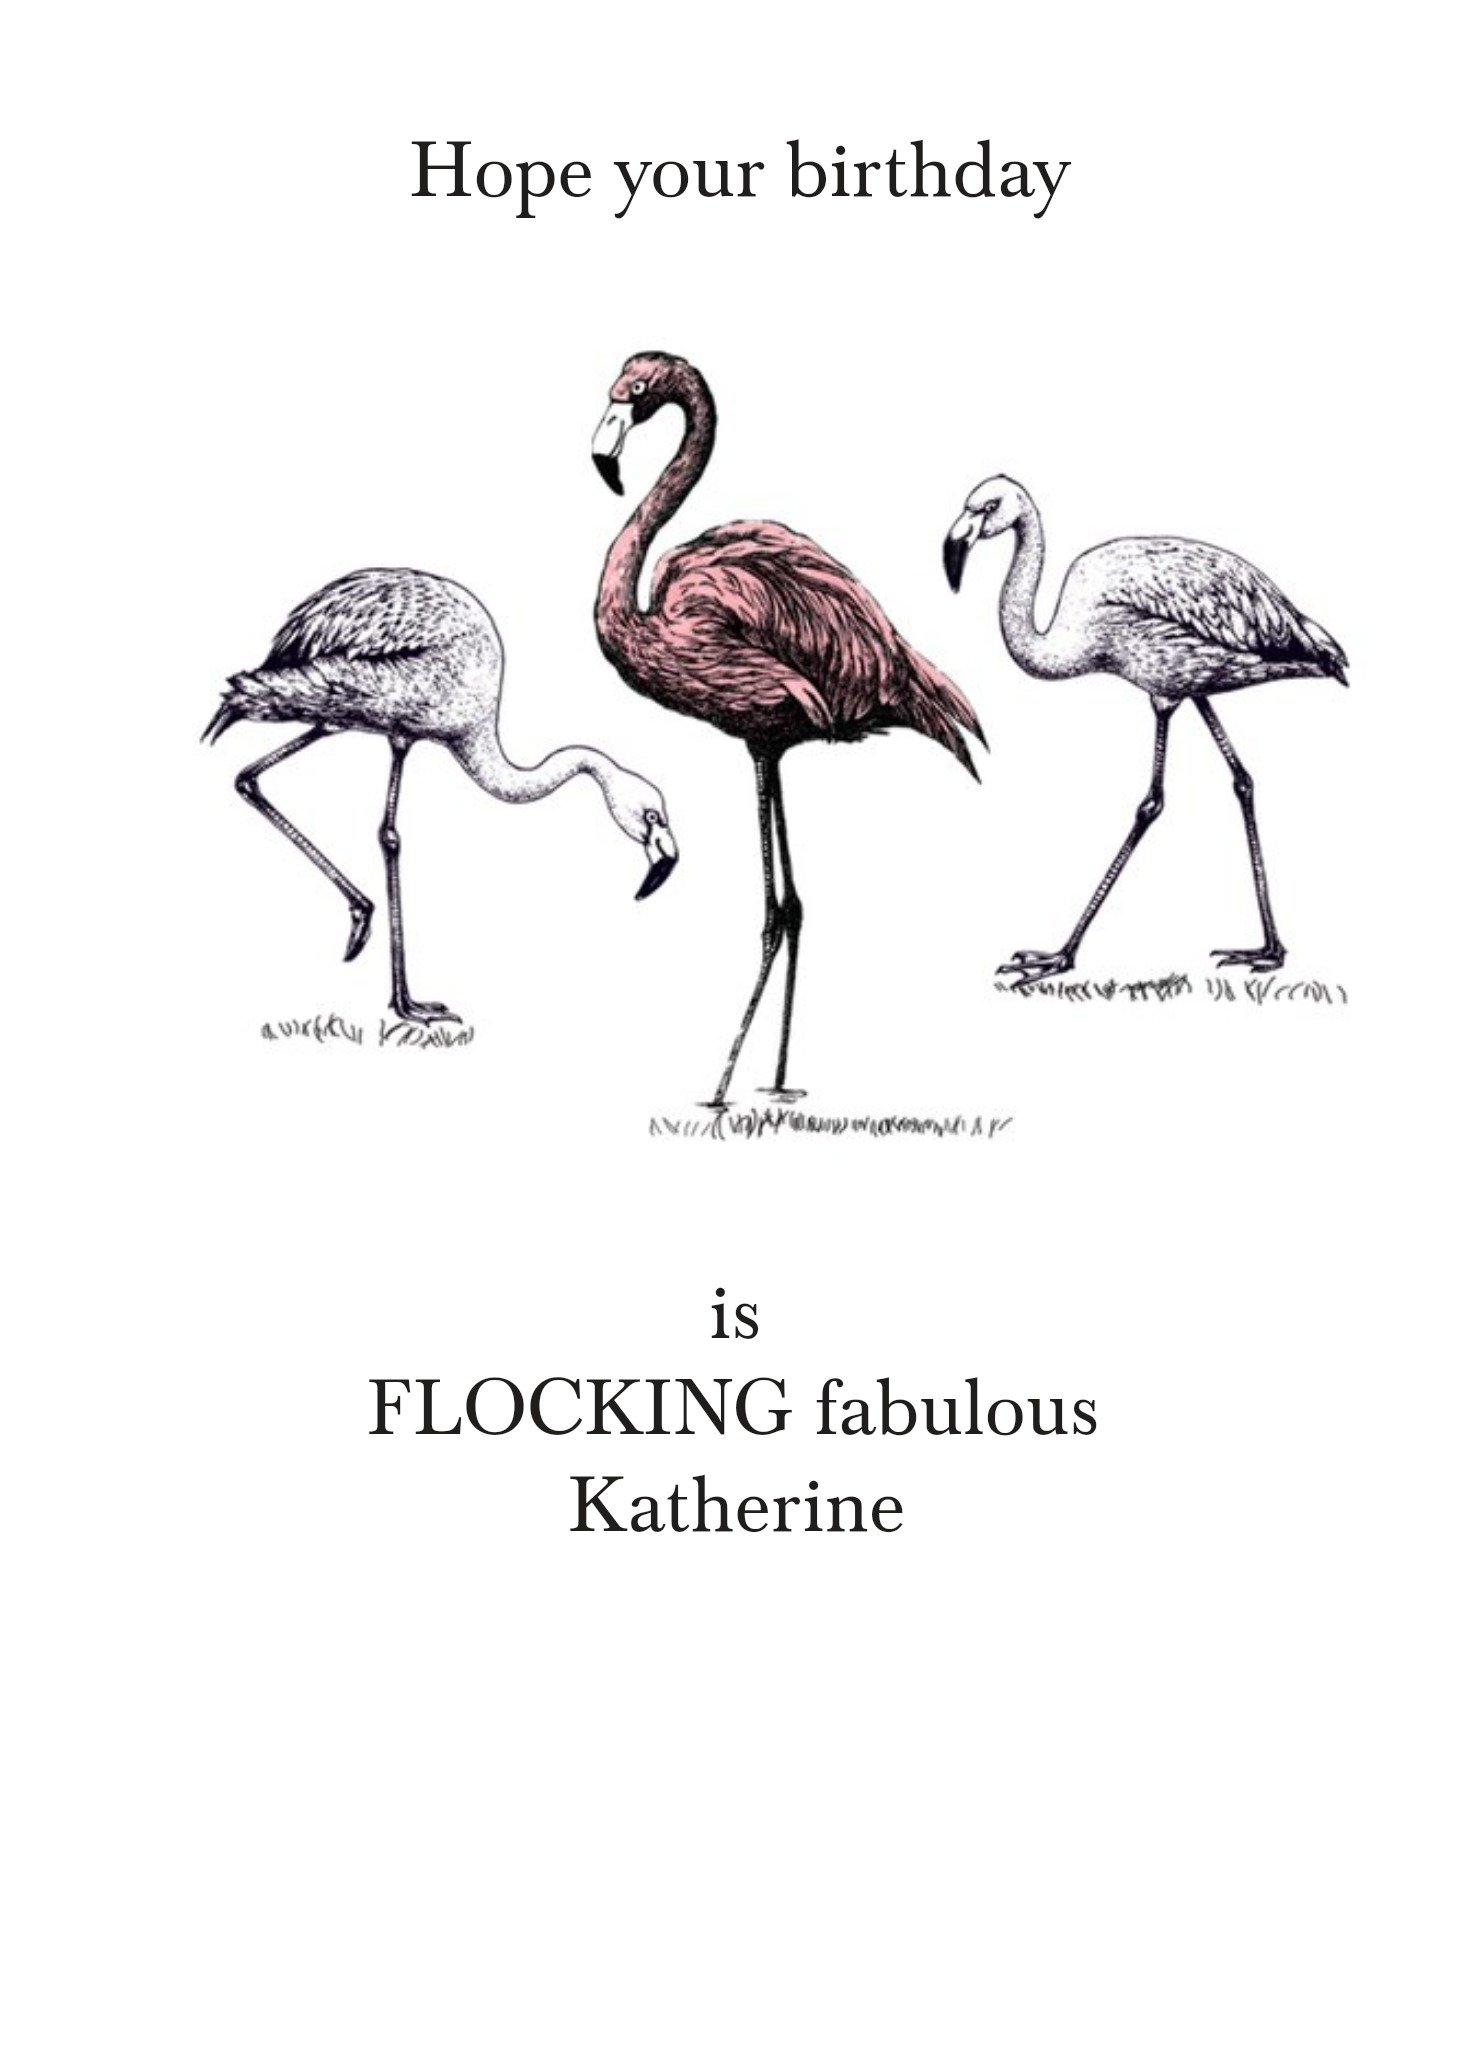 Moonpig Birthday Card - Birds - Fabulous, Large